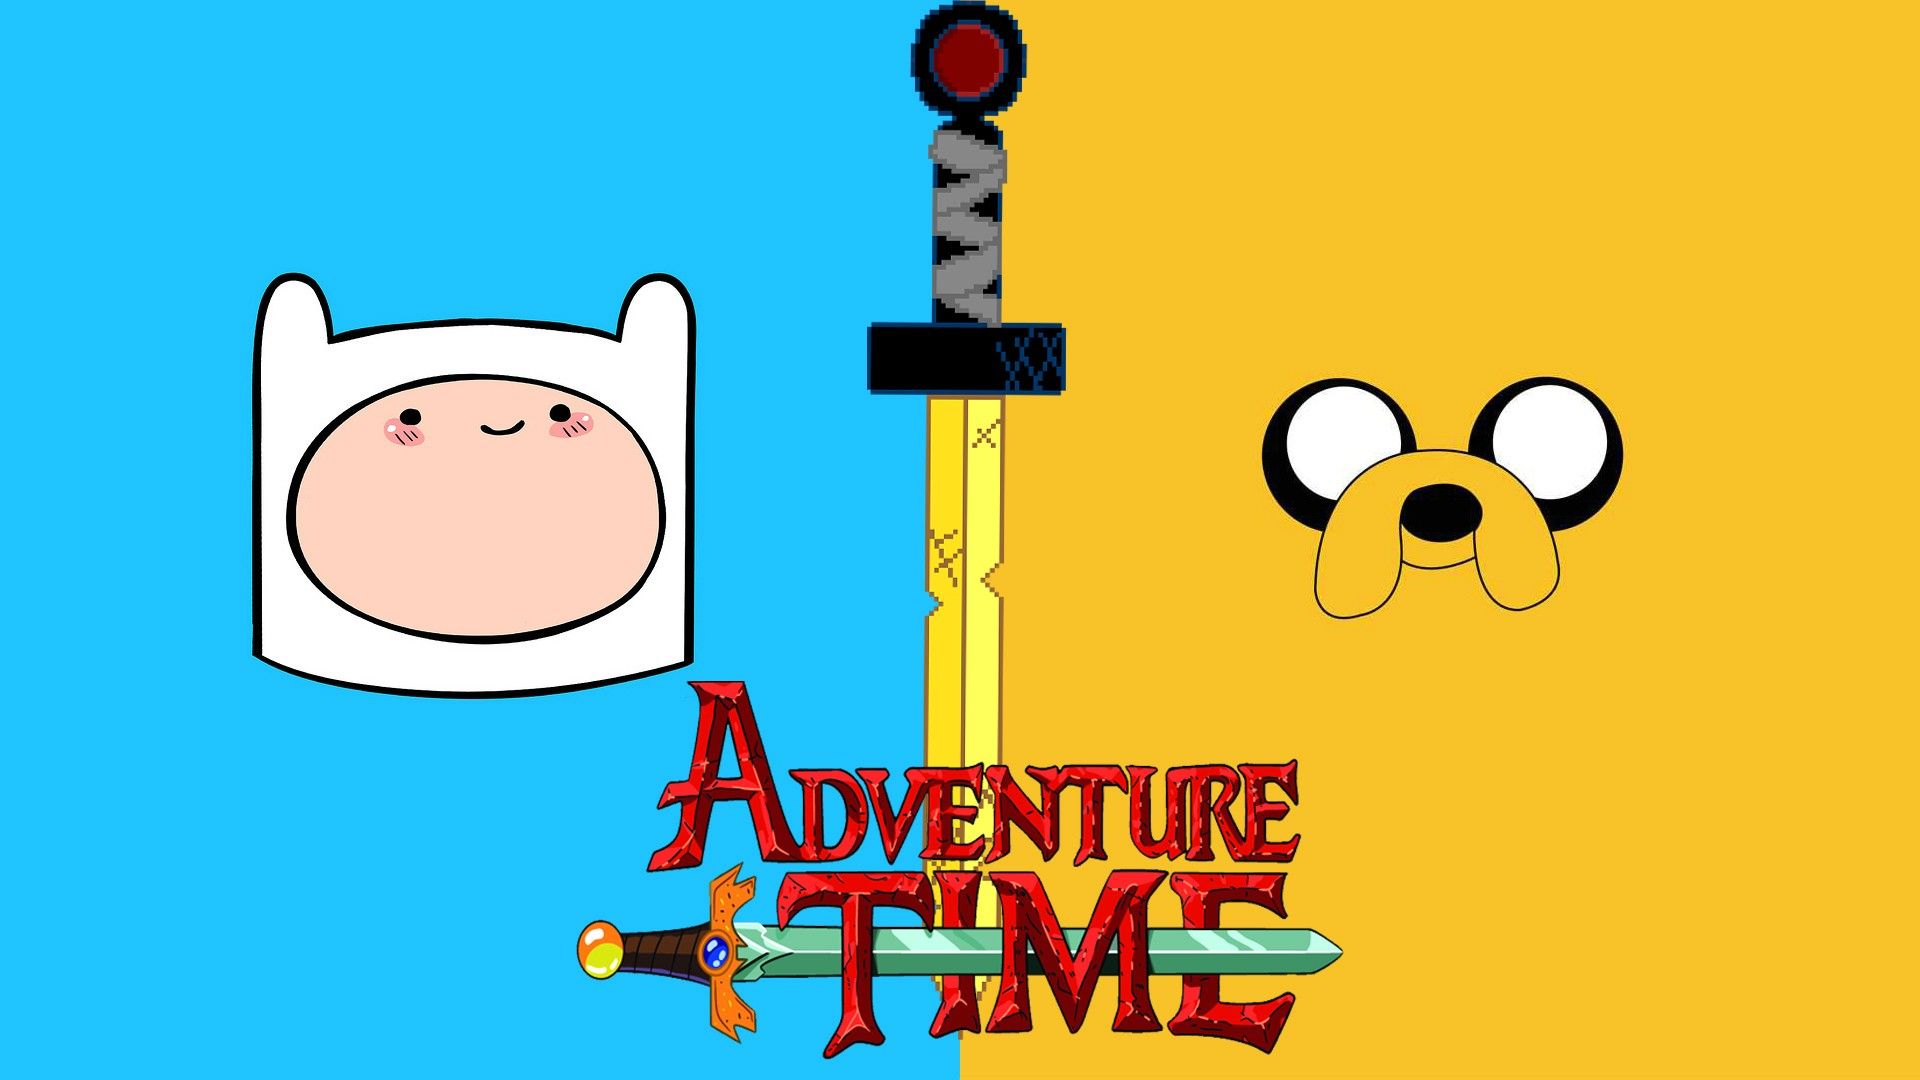 Adventure Time wallpaper | 1920x1080 | #37256